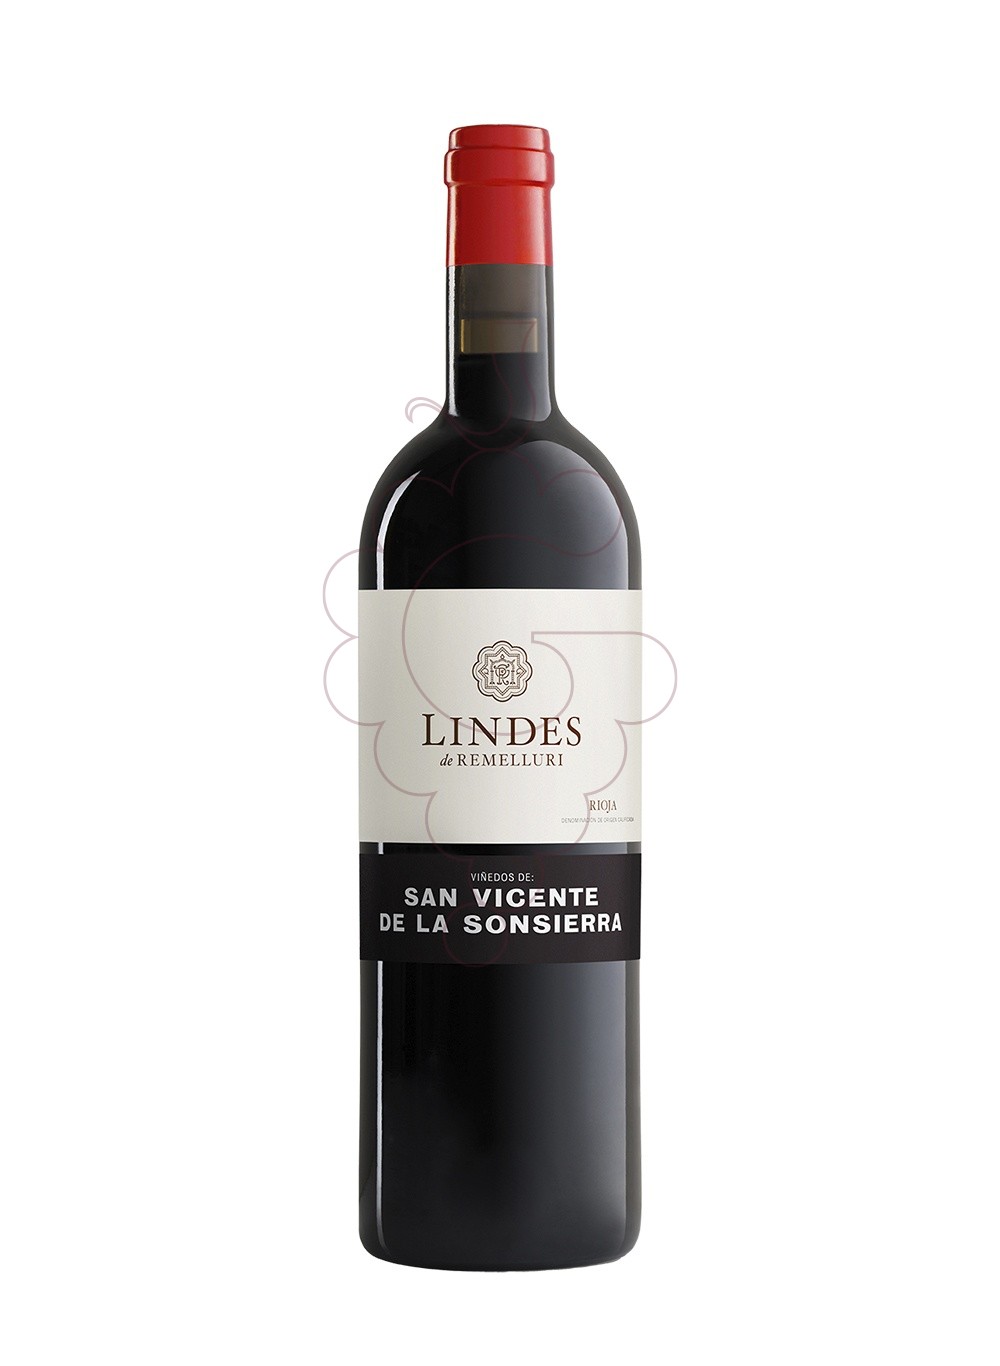 Photo Lindes de Remelluri (S.Vicente) red wine